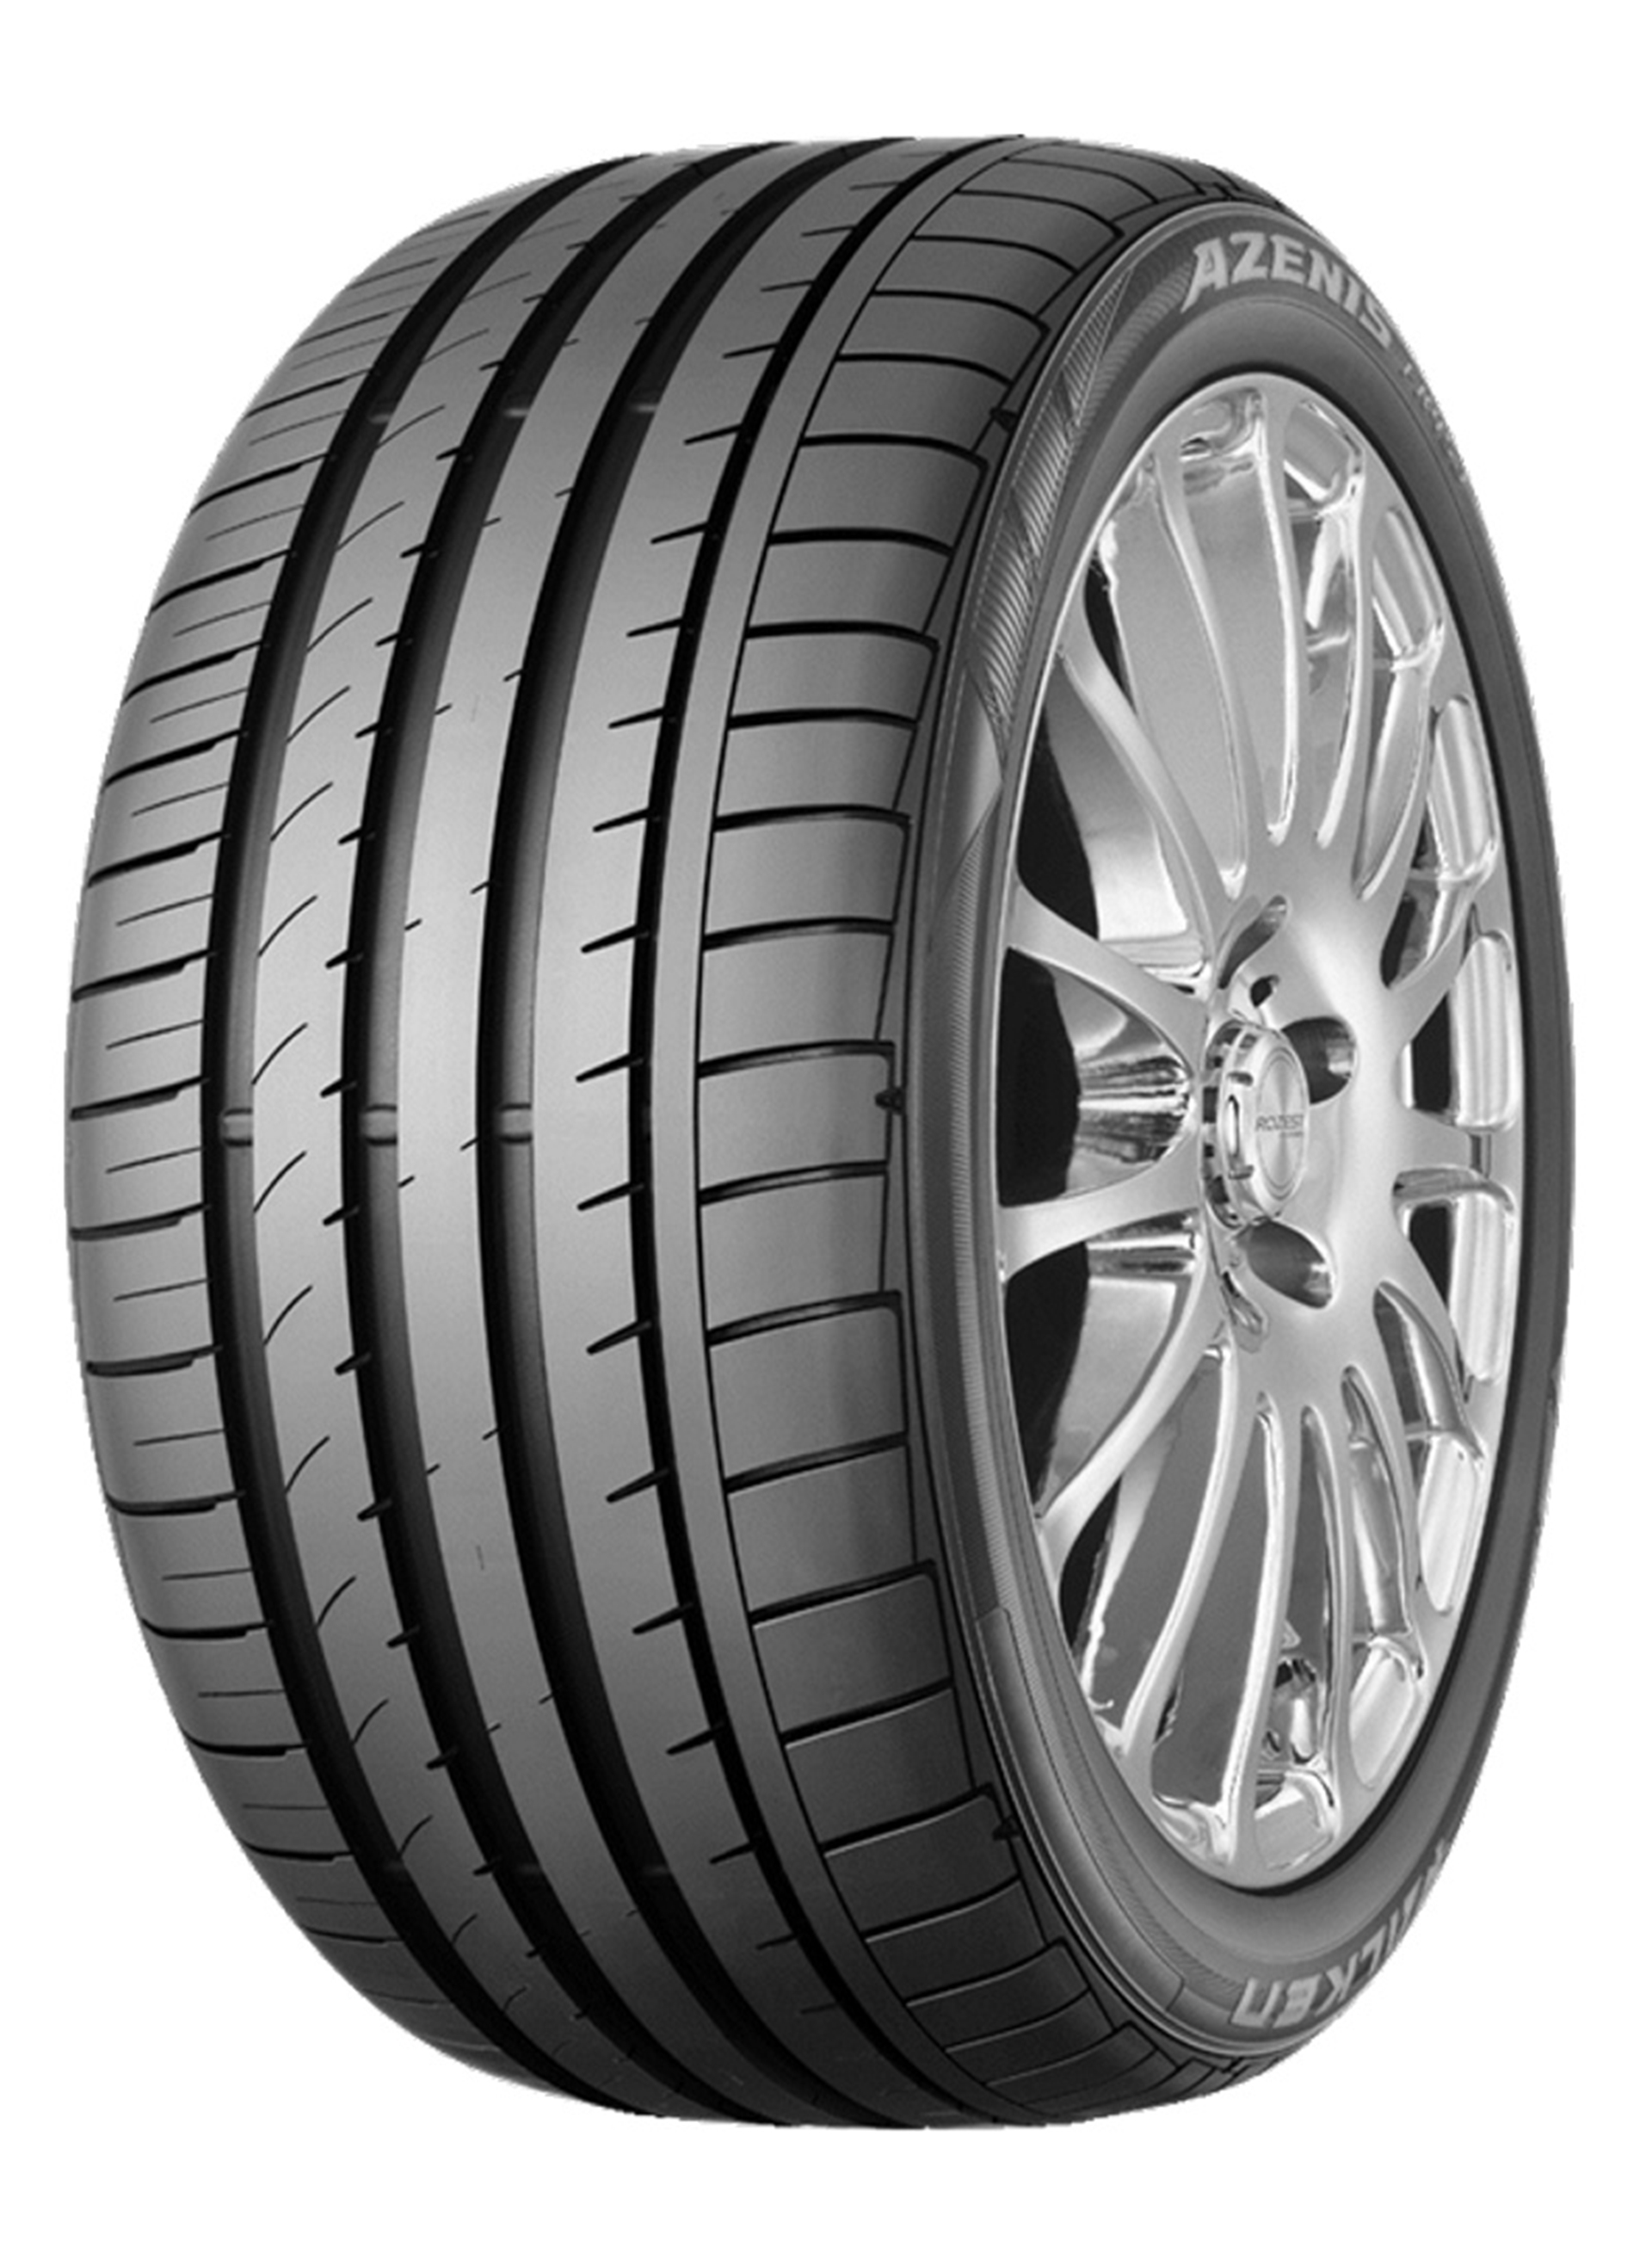 REIFEN 2012, Essen – Falken presents latest product range at world’s leading tyre trade show